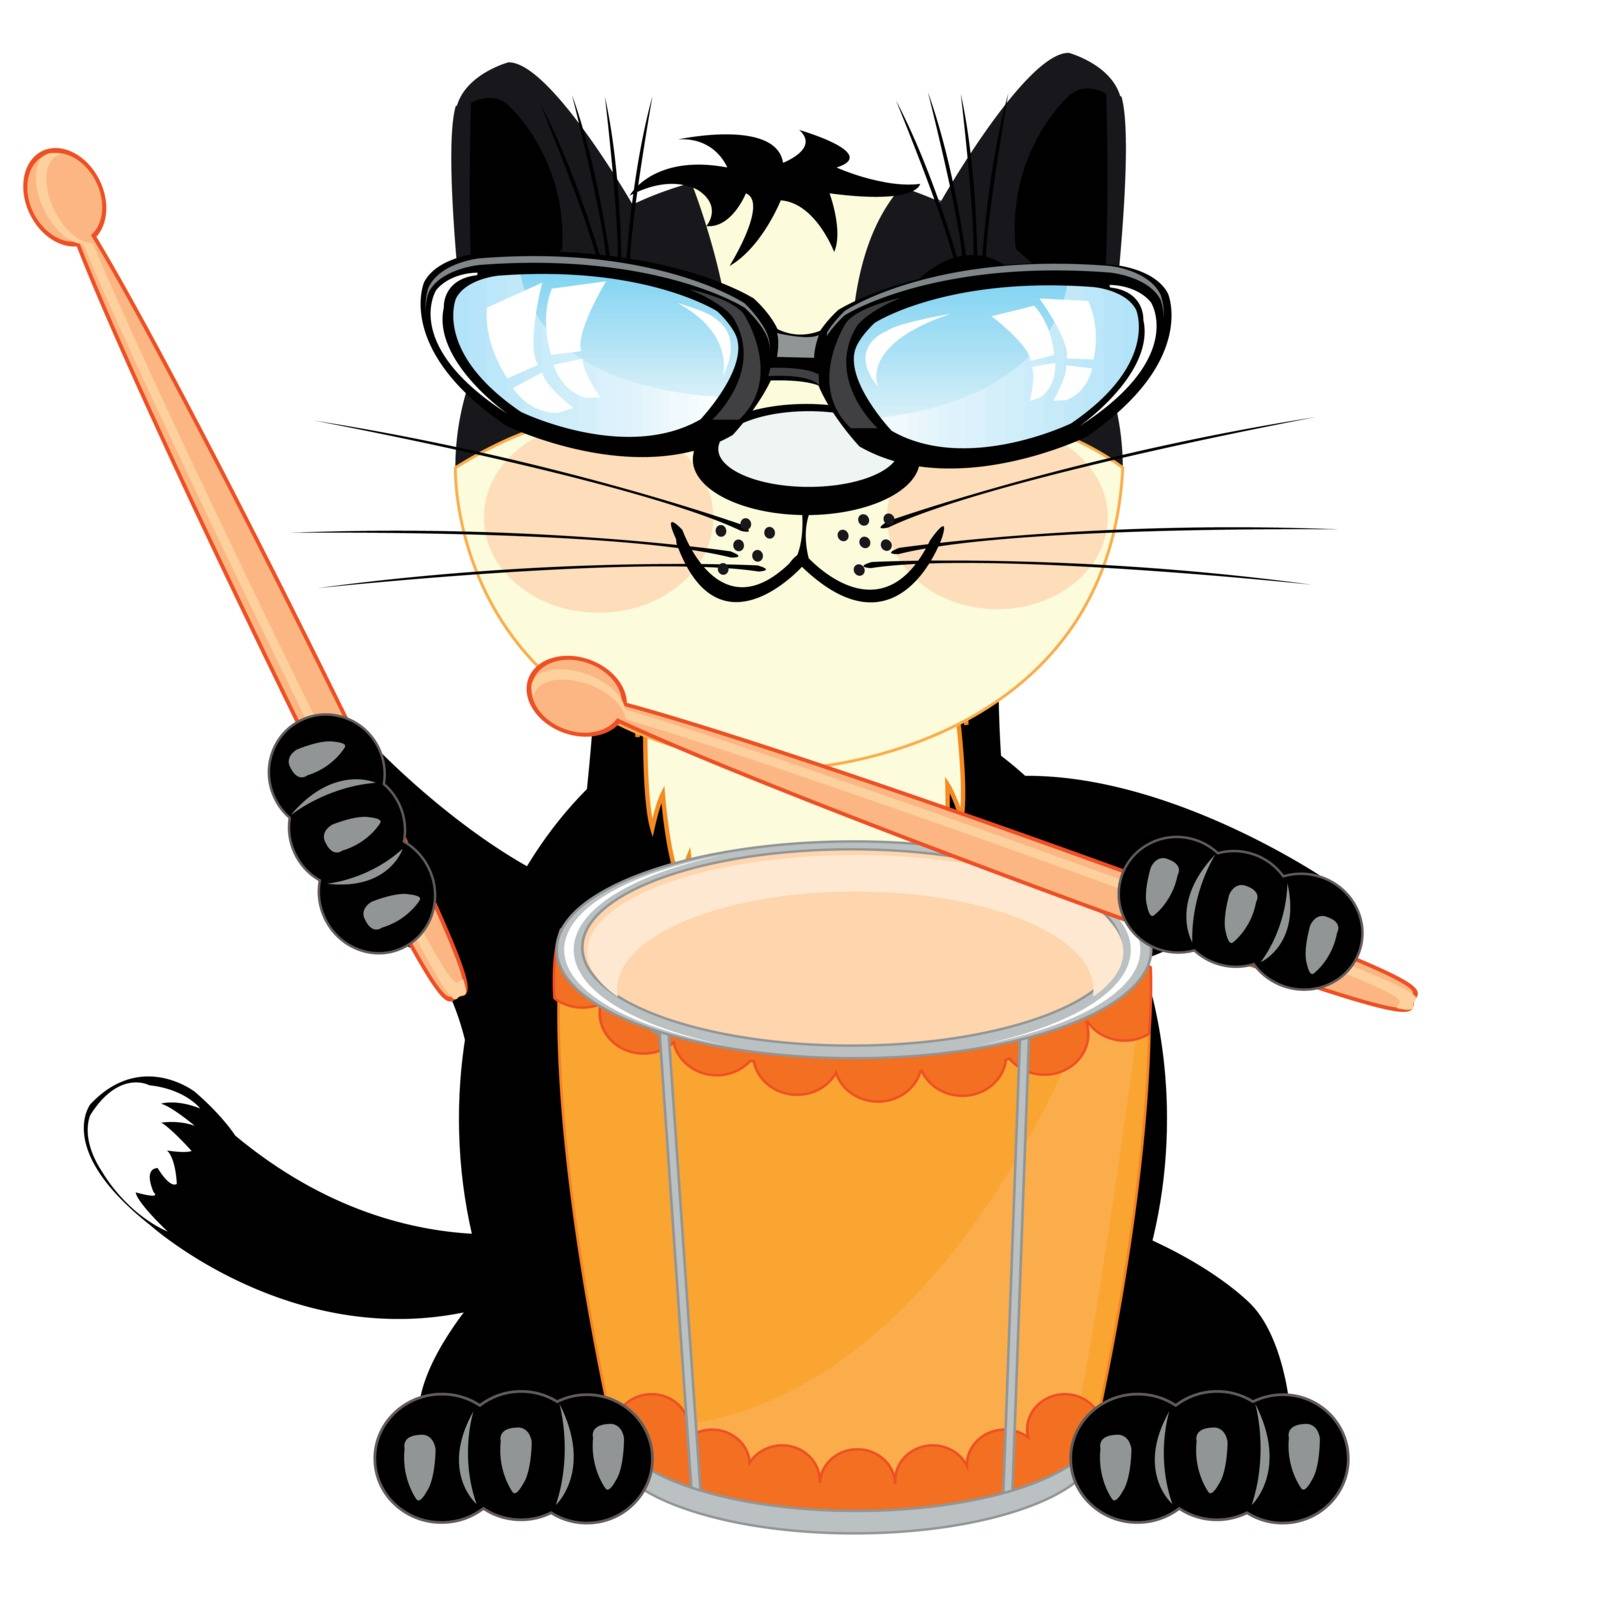 Pets black cat plays on music instrument drum